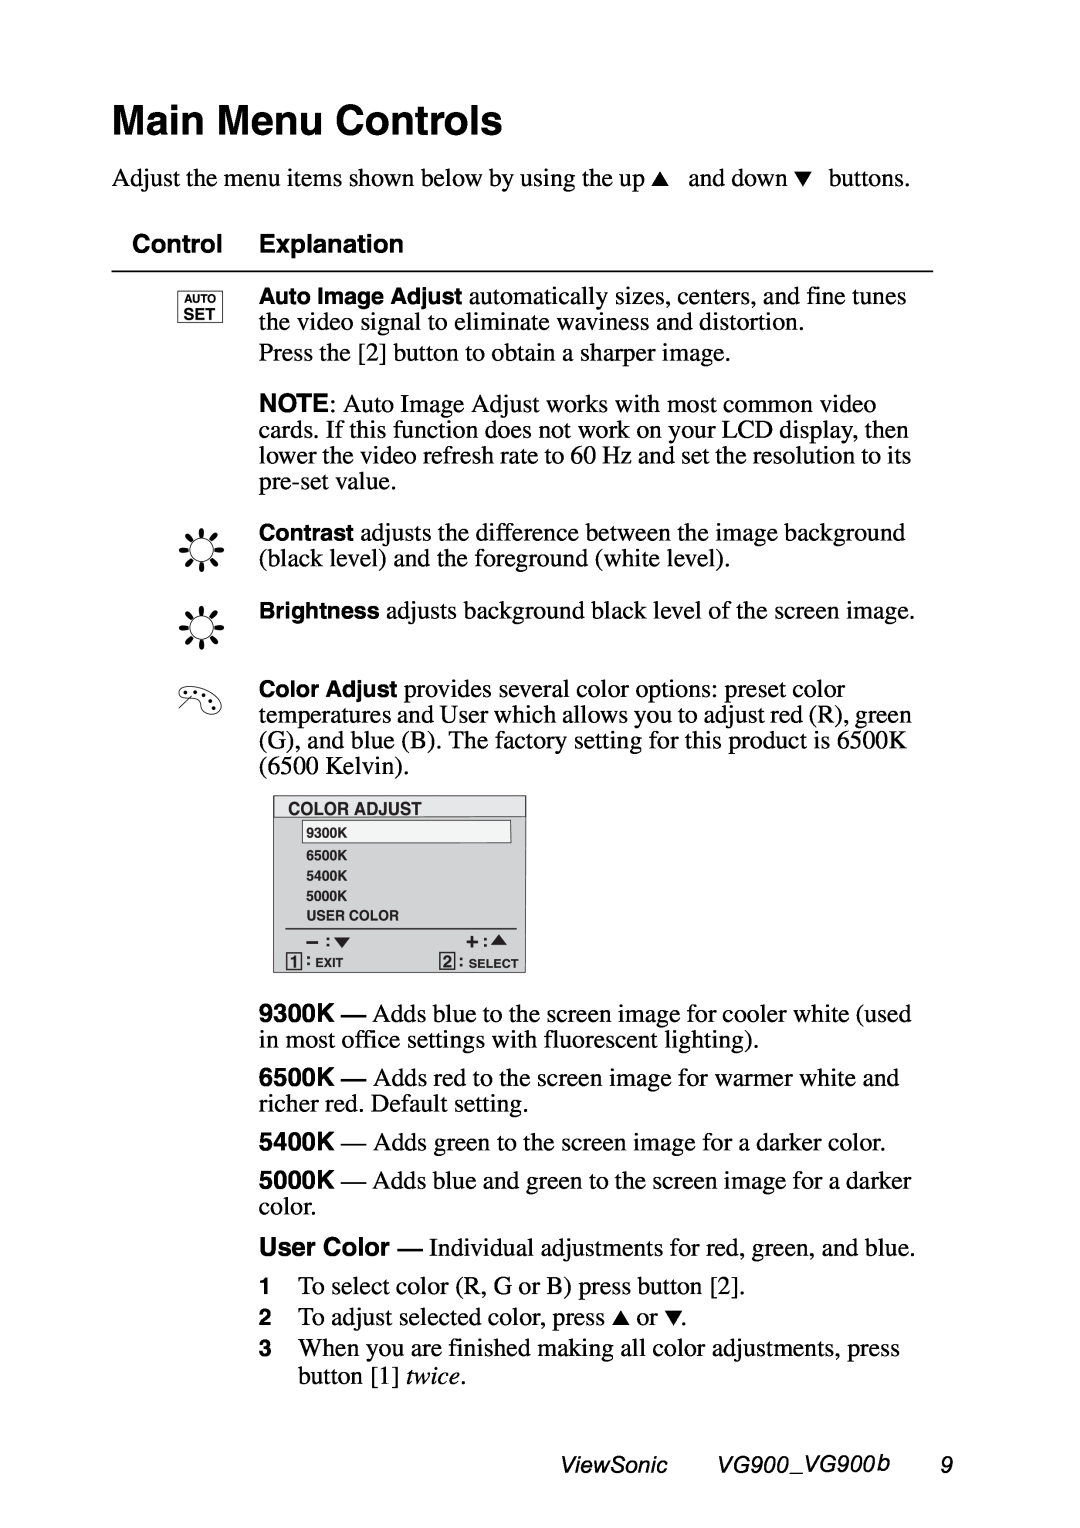 ViewSonic VG900 manual Main Menu Controls, Control Explanation 